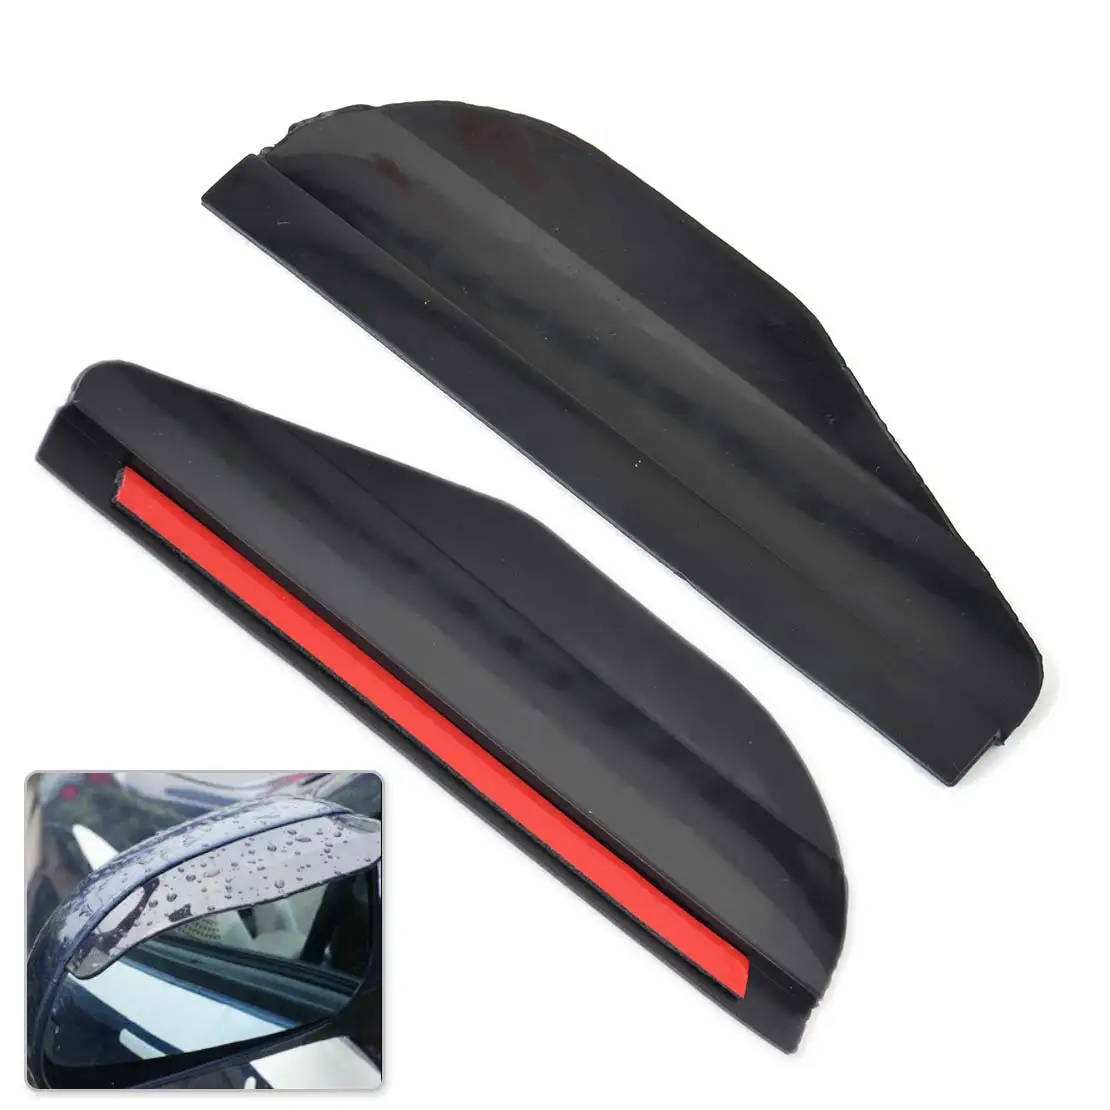 2X Universal Auto Rear View Side Mirror Visor Shield Rain Water Rainproof Cover